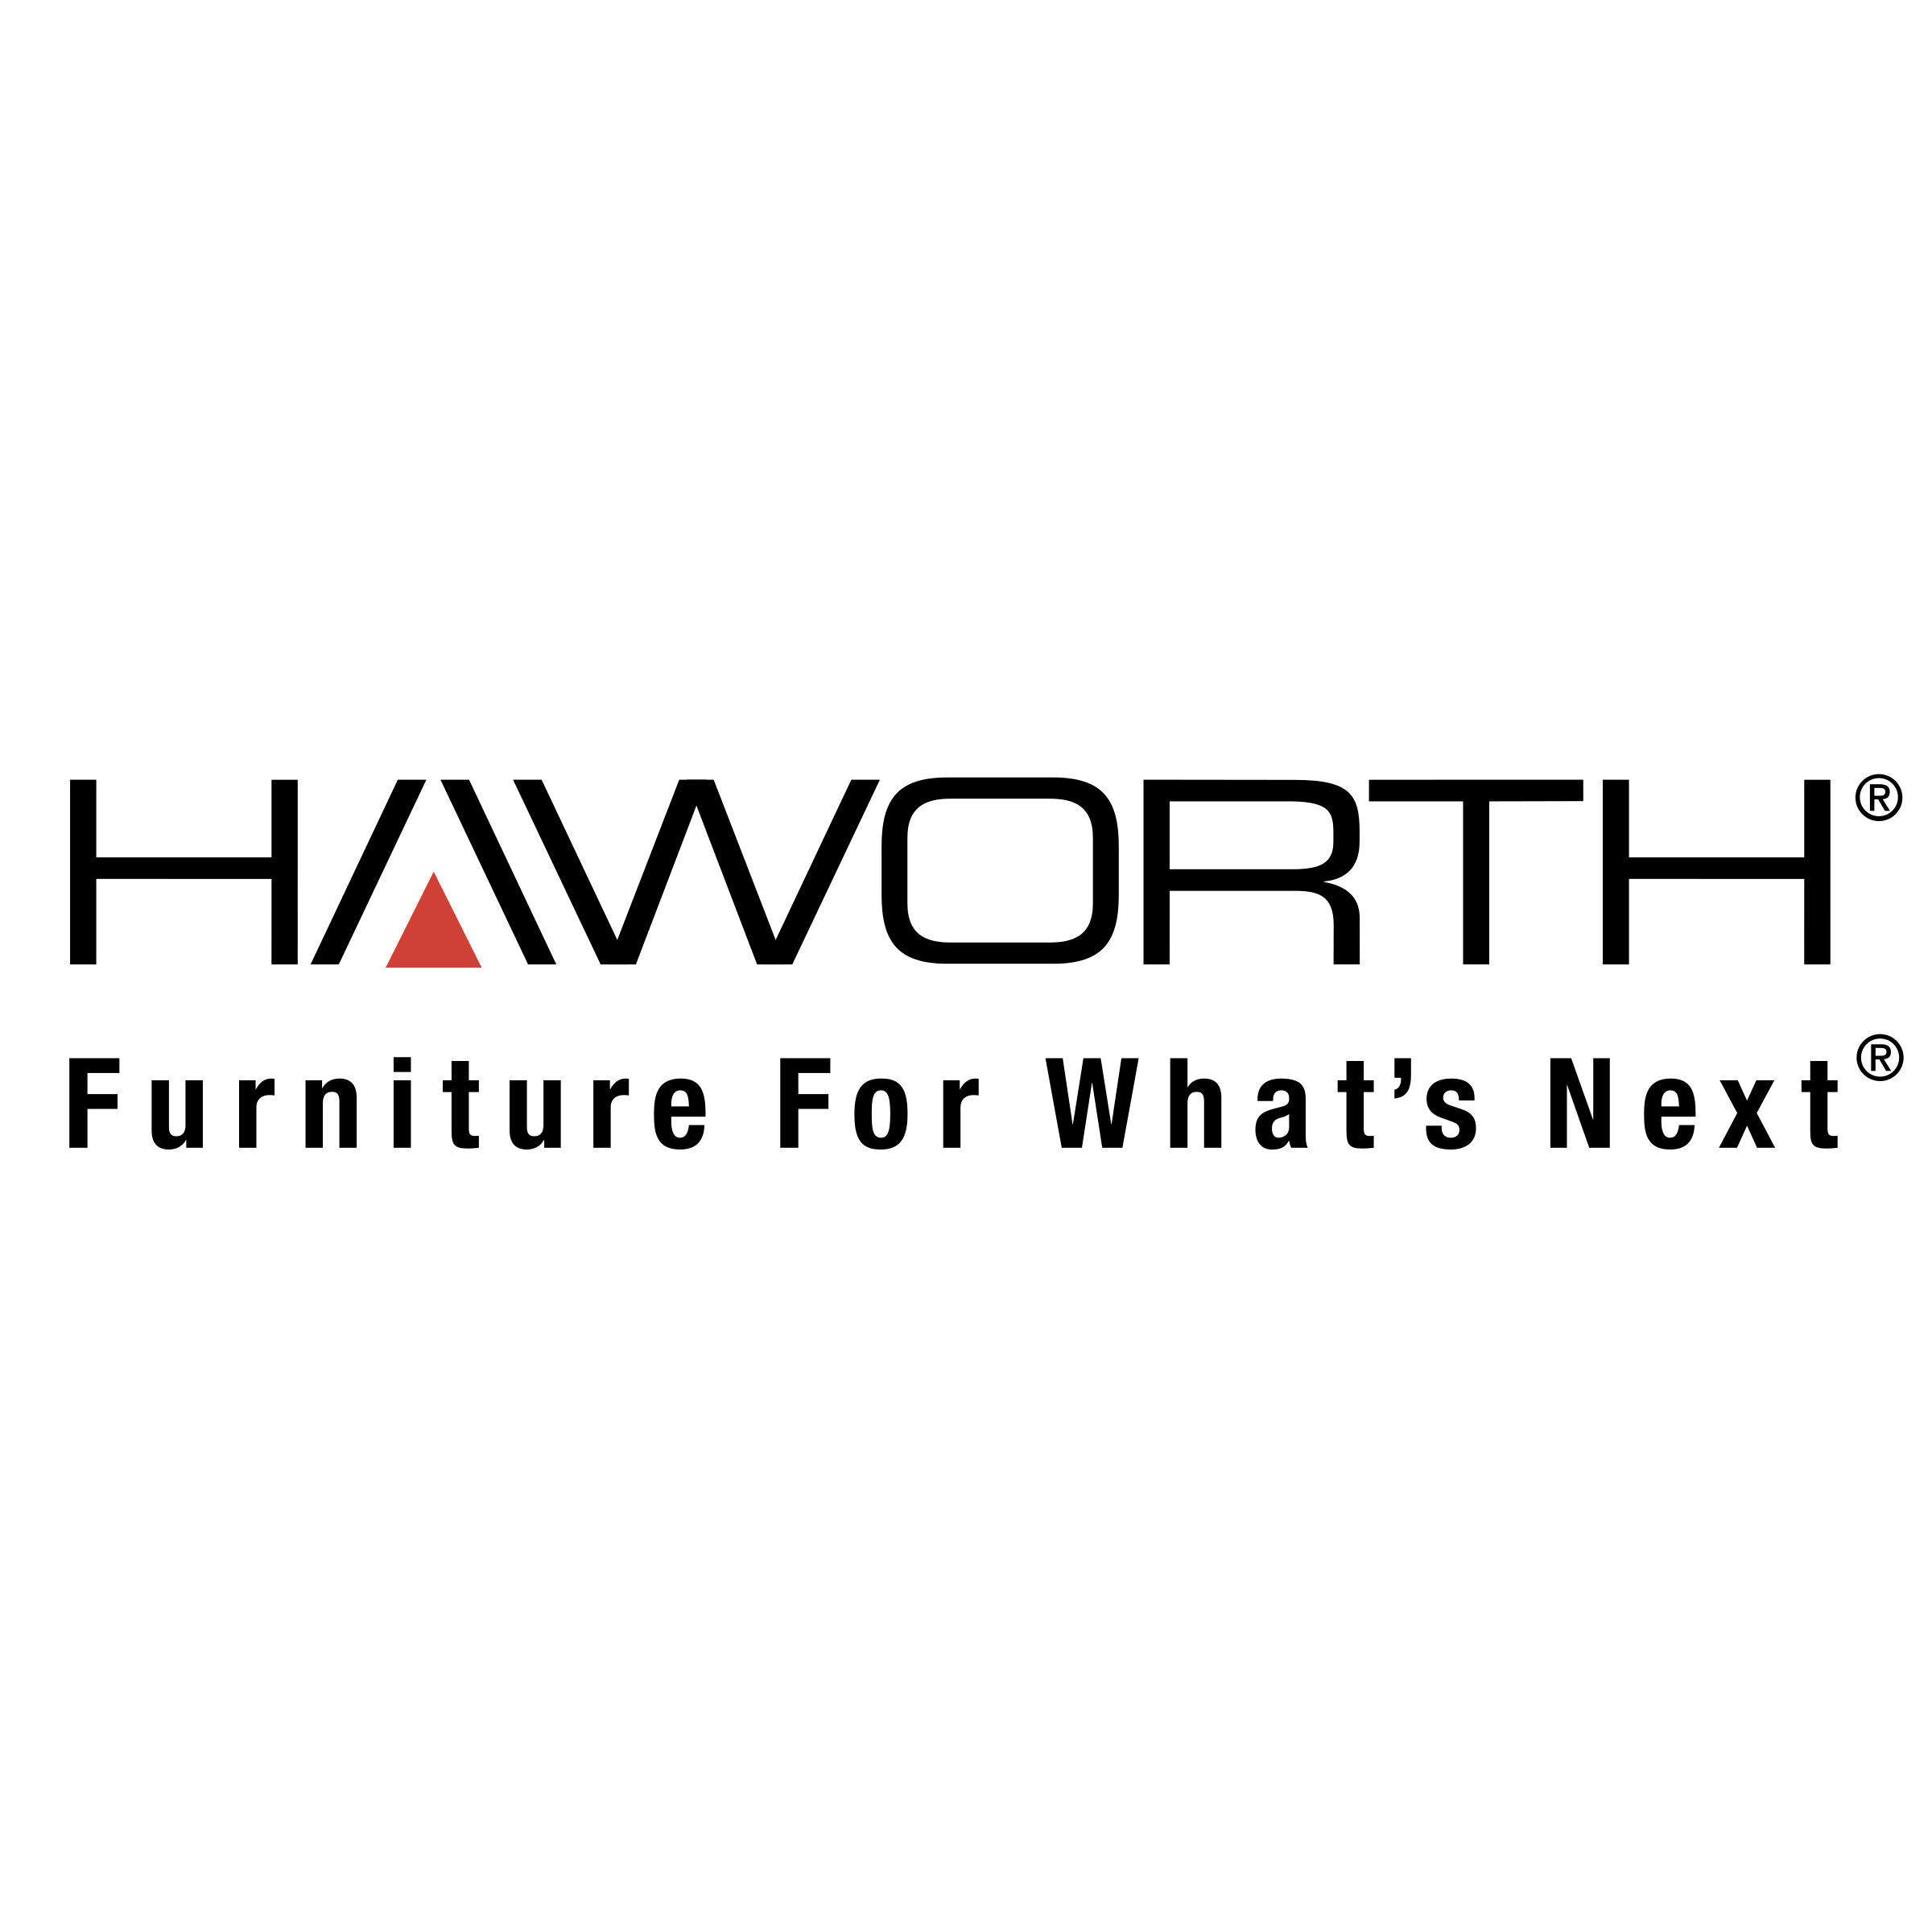 Haworth Logo - Haworth Logo PNG Transparent & SVG Vector